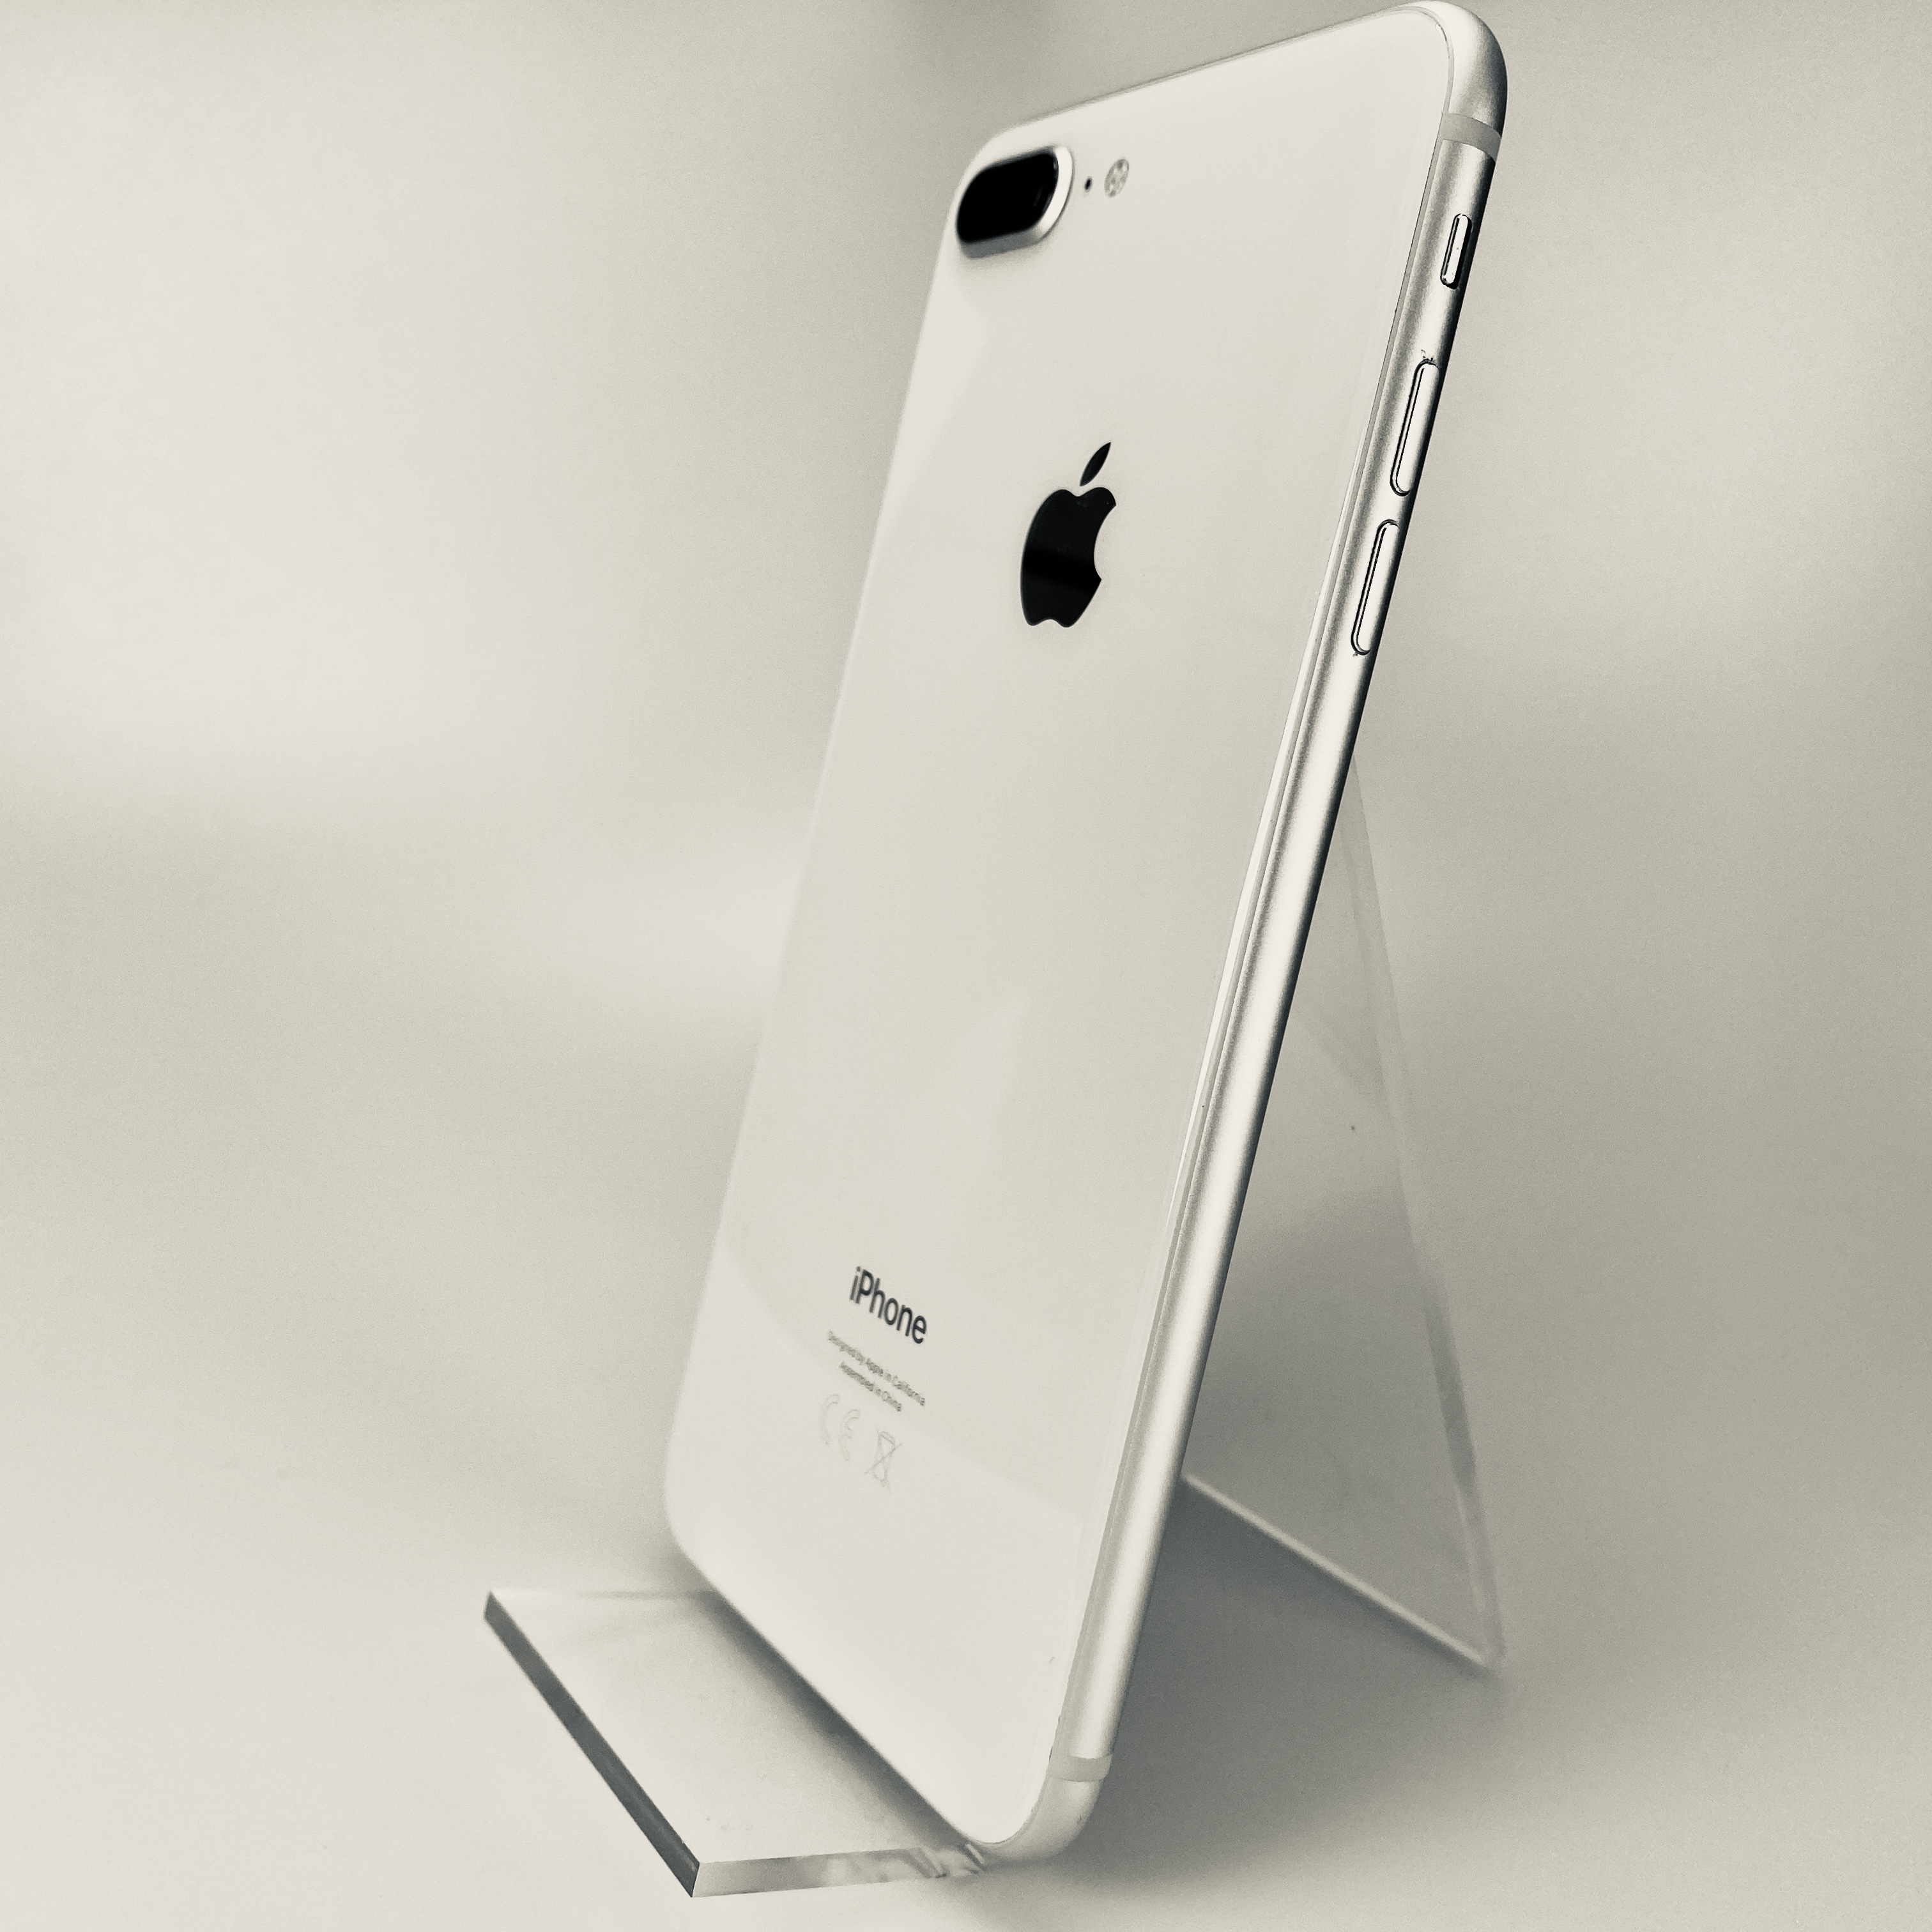 iPhone8 silver 64GB ドコモ